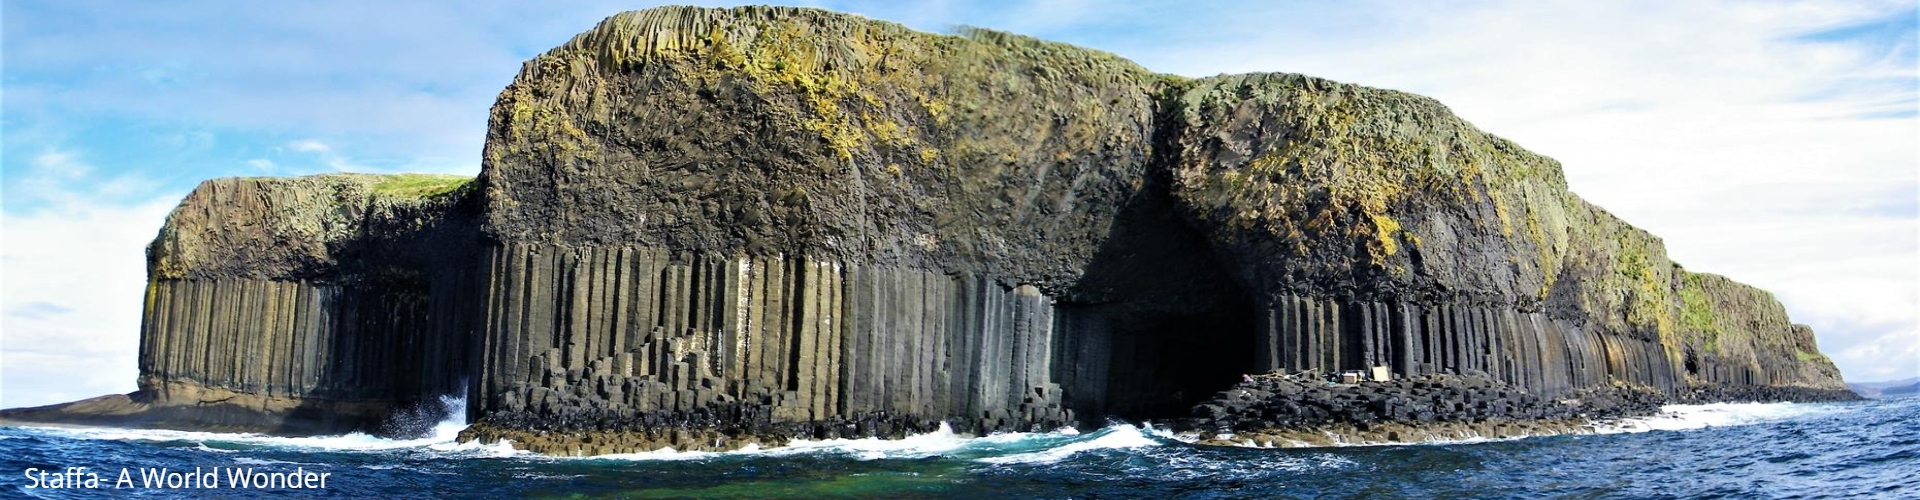 Isle of Staffa, Fingal's Cave, Isle of Mull